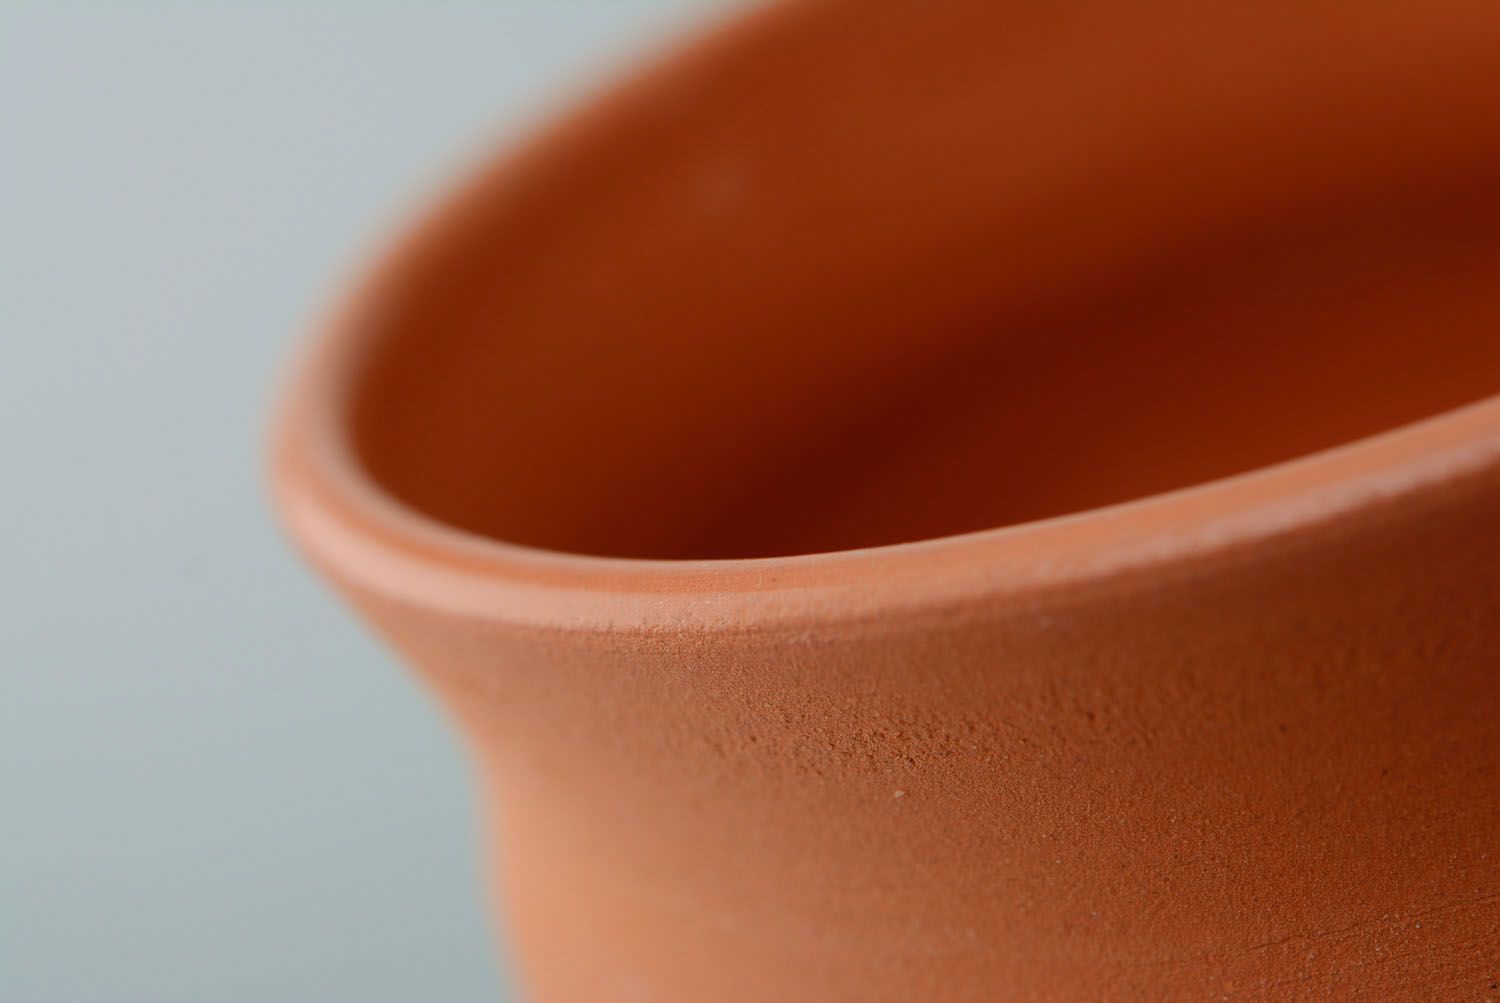 Small ceramic bowl photo 5